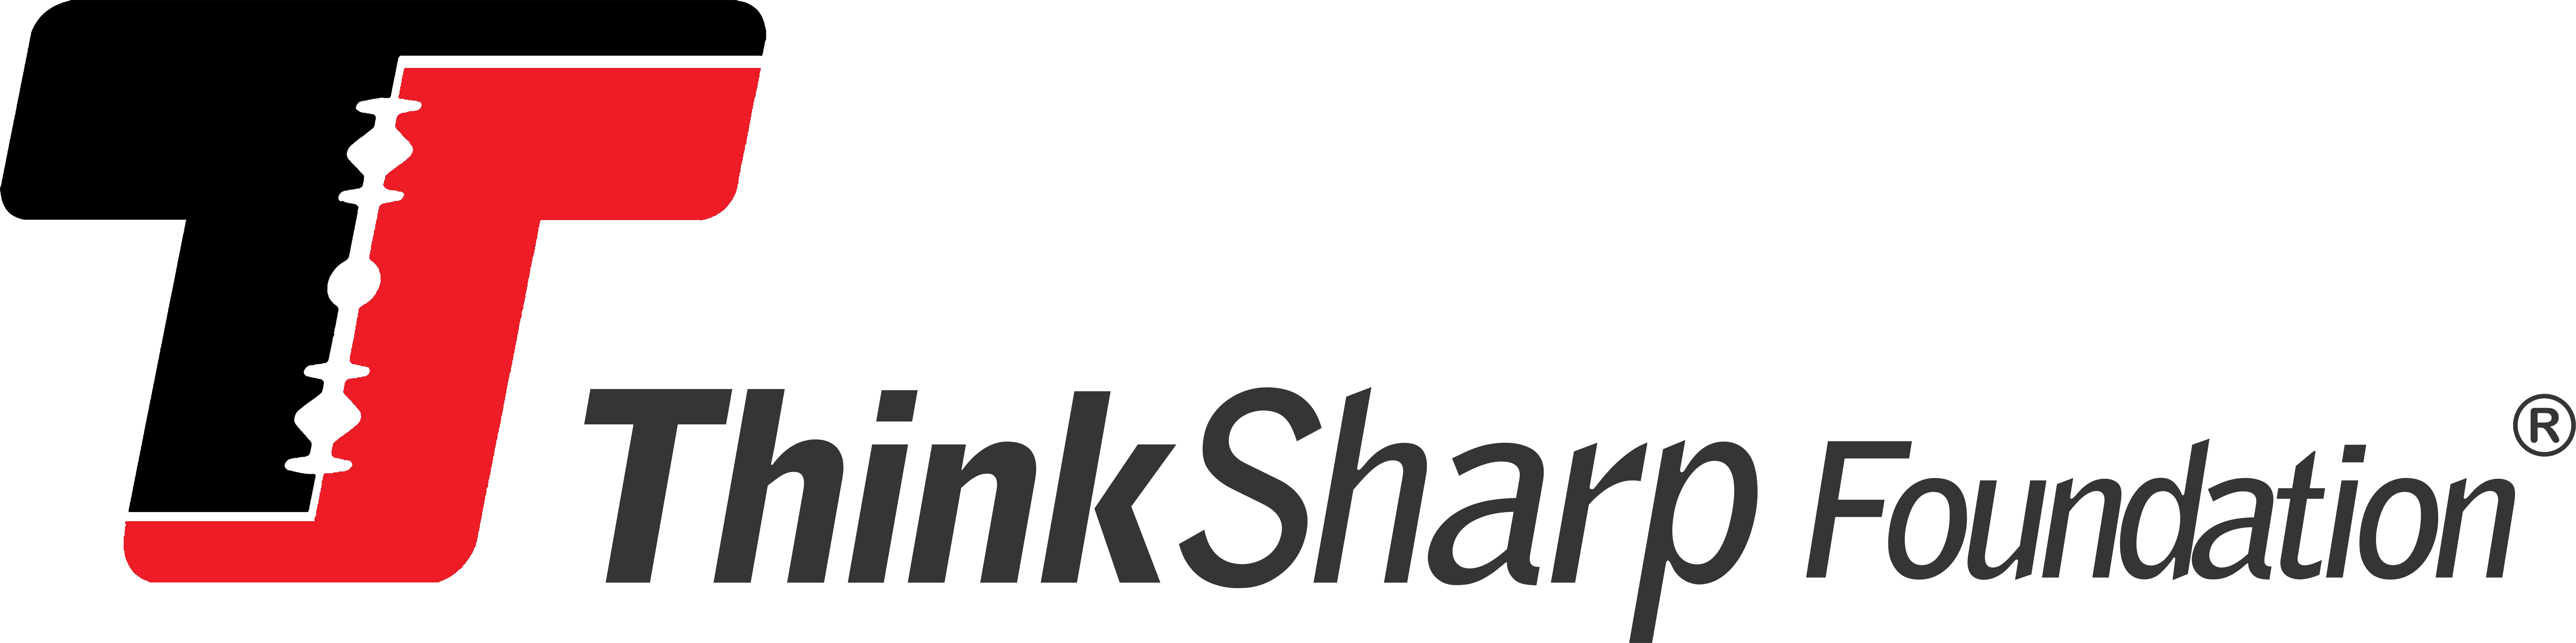 ThinkSharp Foundation